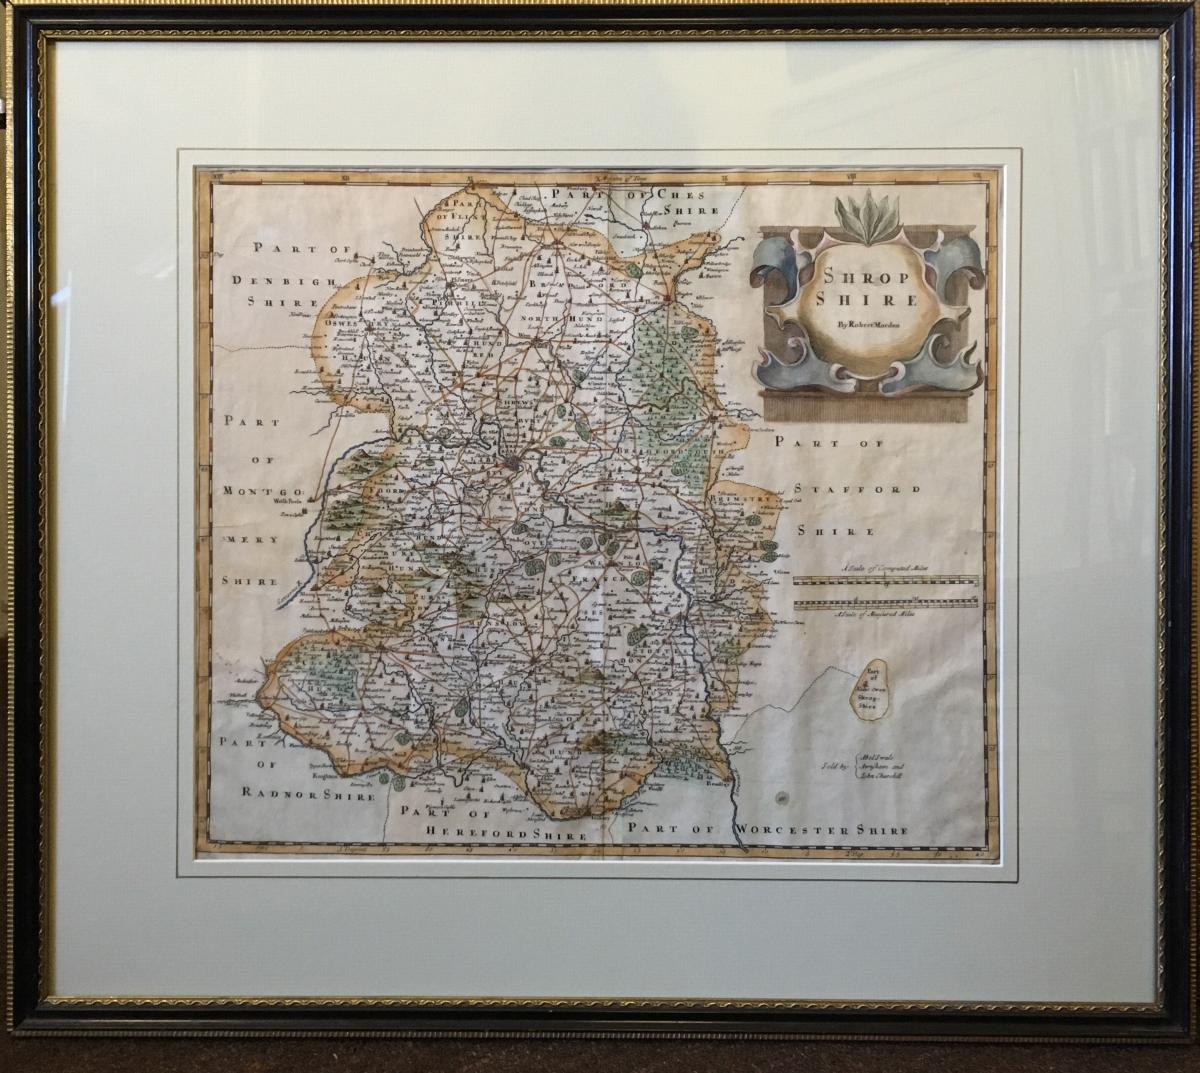 Robert Morden’s Map of Shropshire